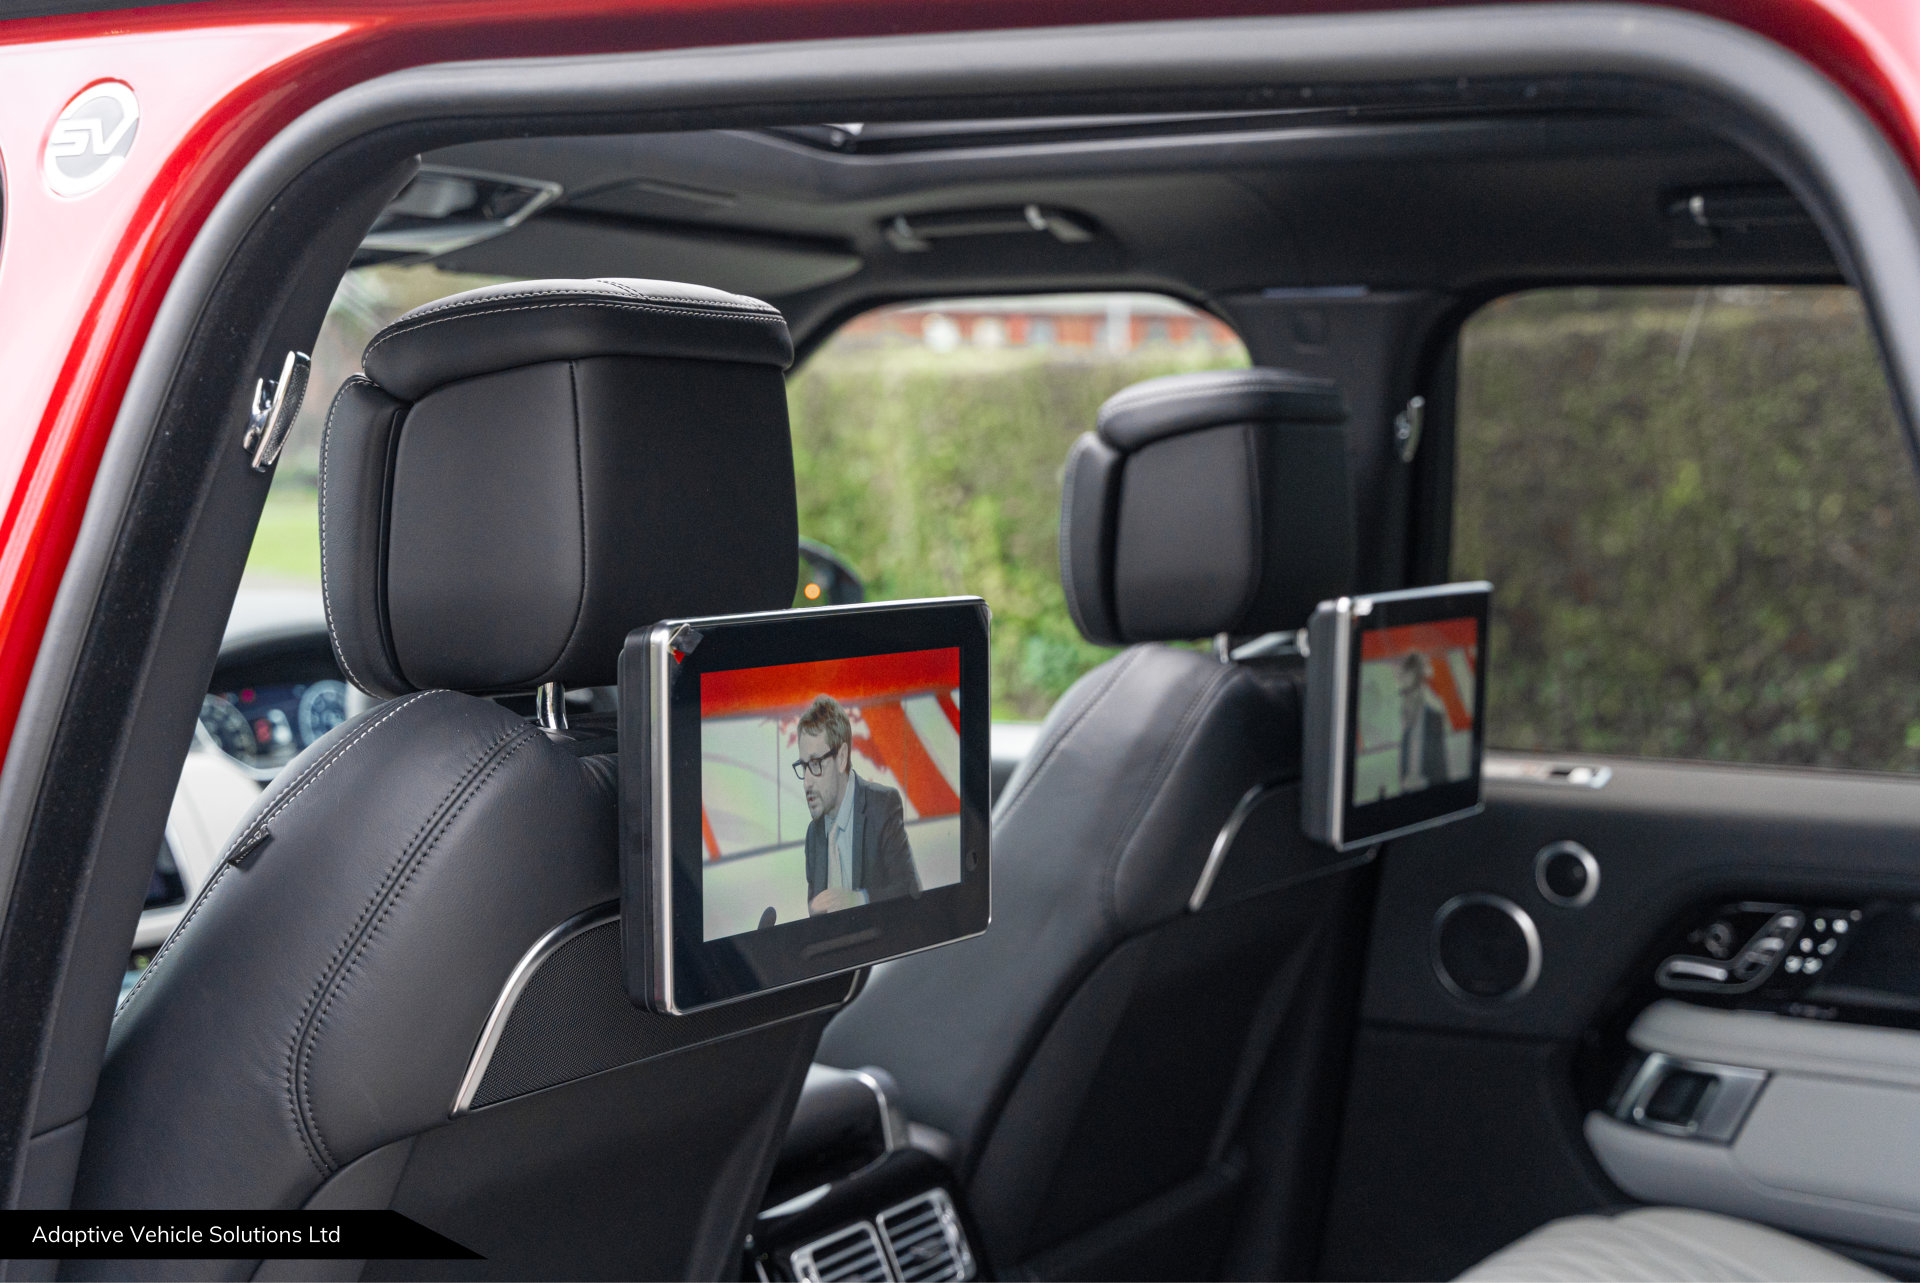 2019 Range Rover SVAutobiography rear entertainment